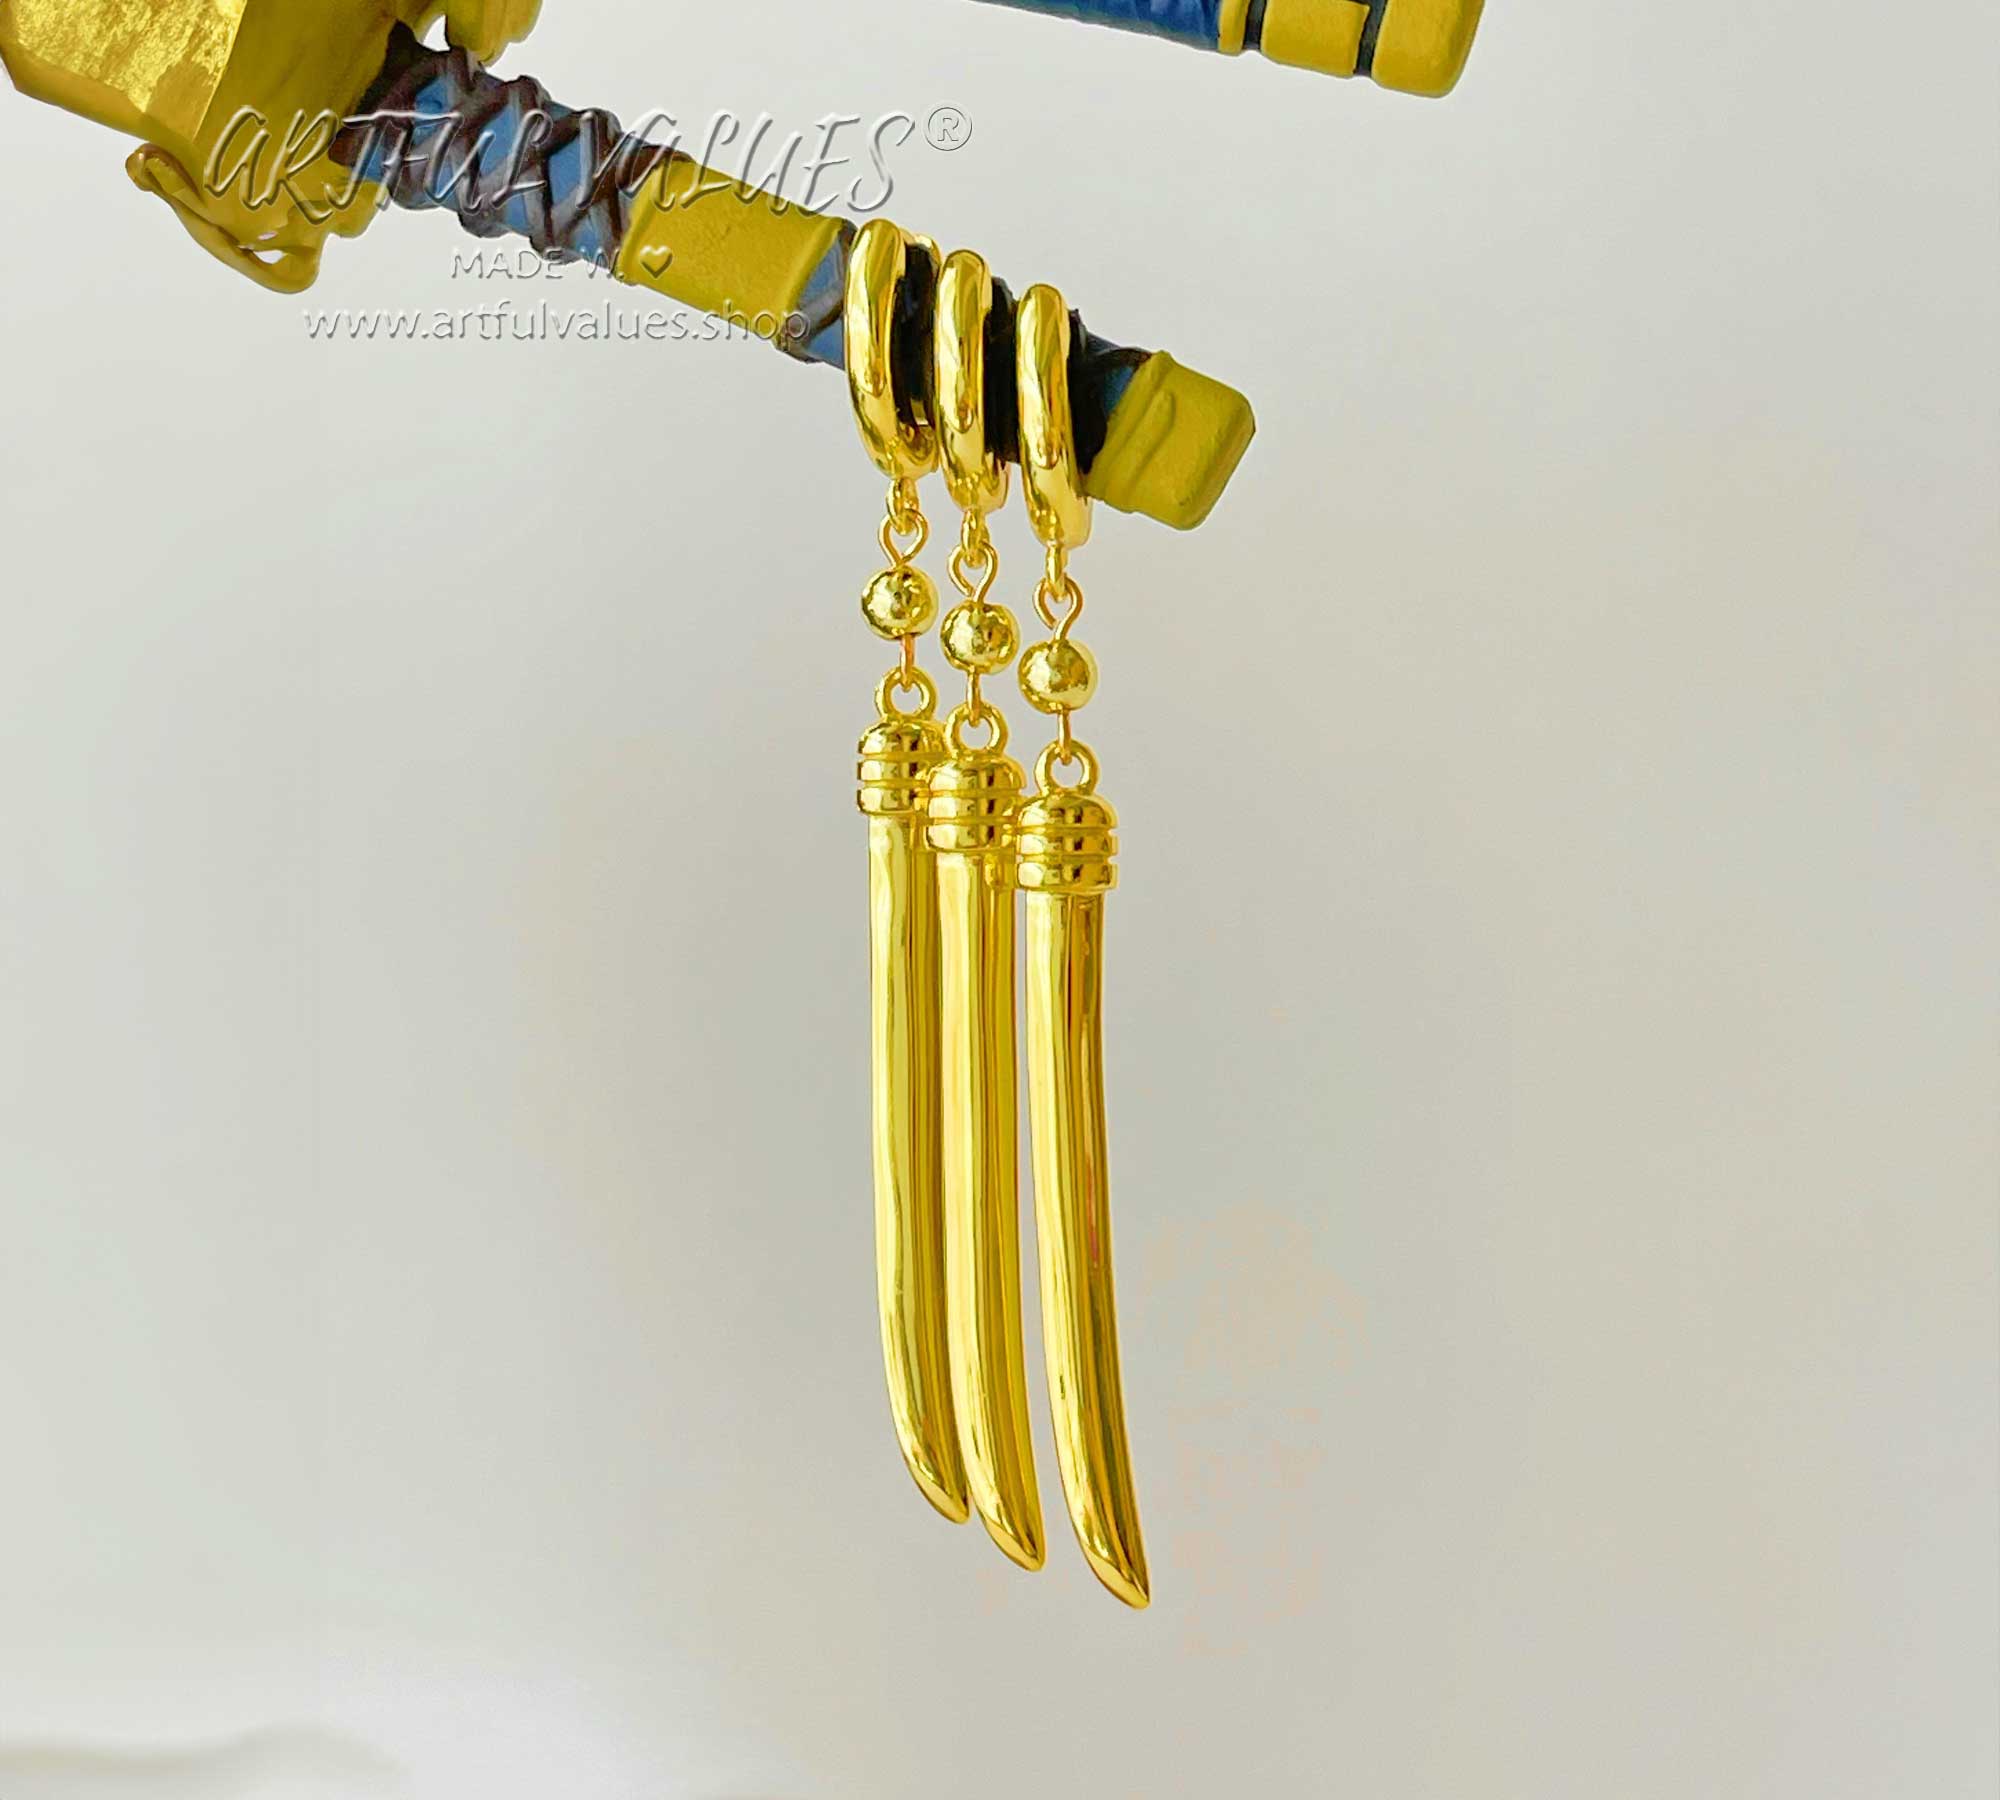 Roronoa Zoro 3 Blades Sword Earrings by Artful Values